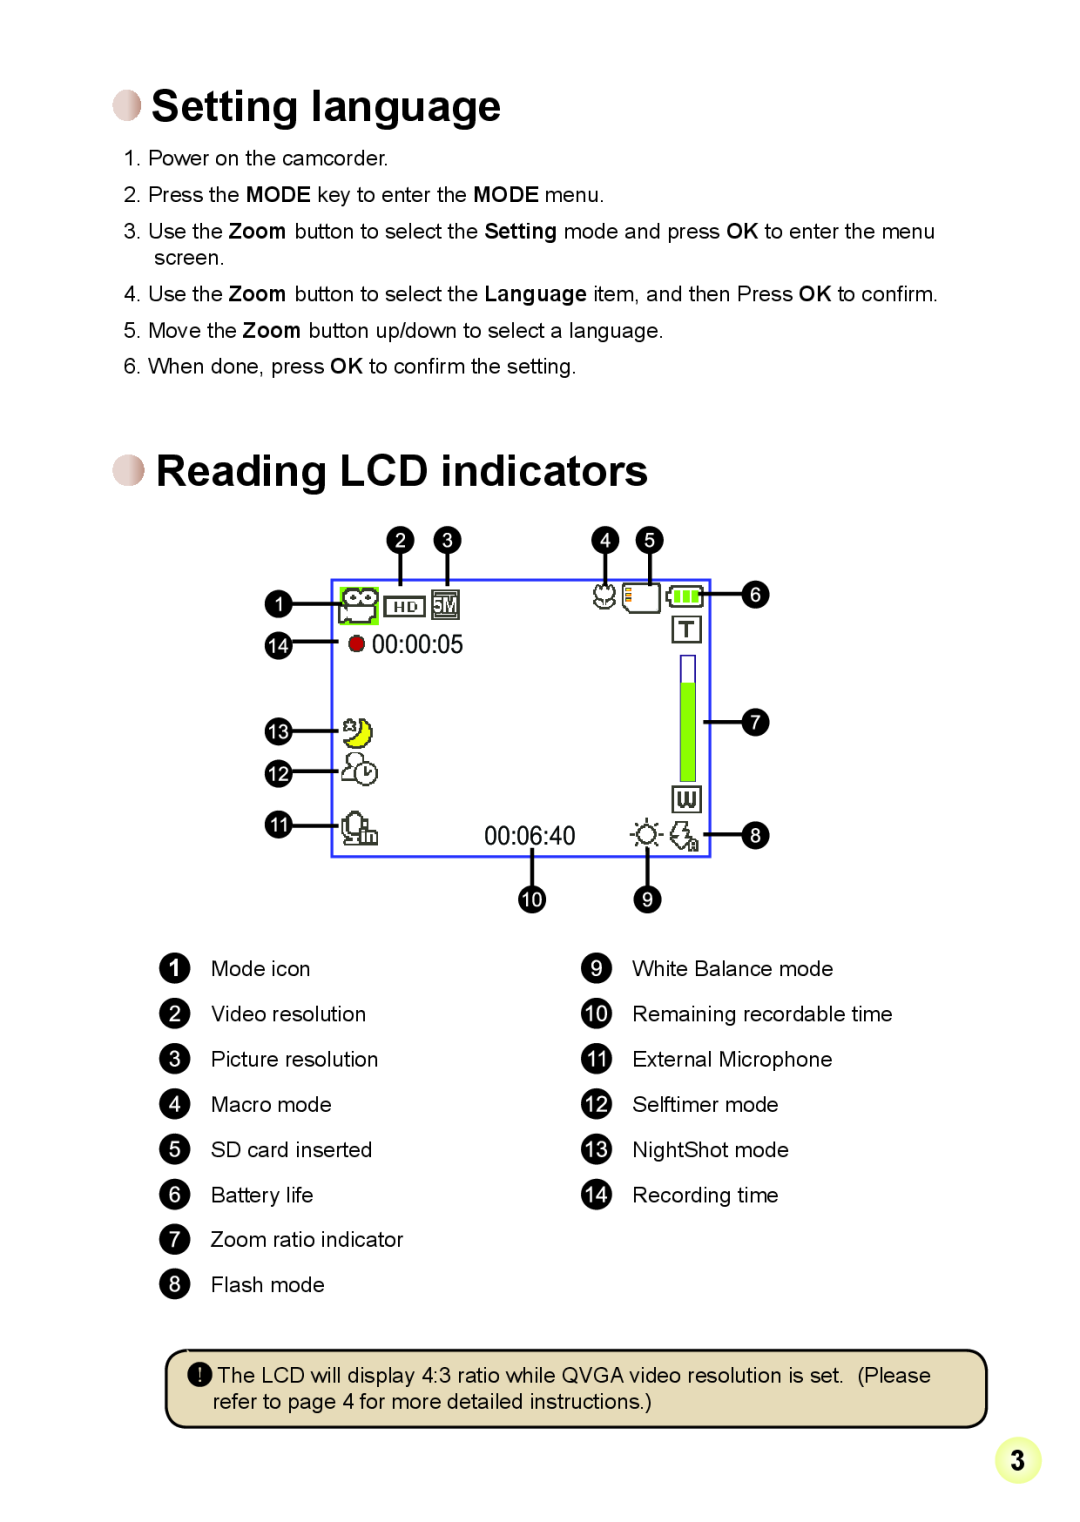 AIPTEK V2T6 manual Setting language, Reading LCD indicators, 000005, 000640 